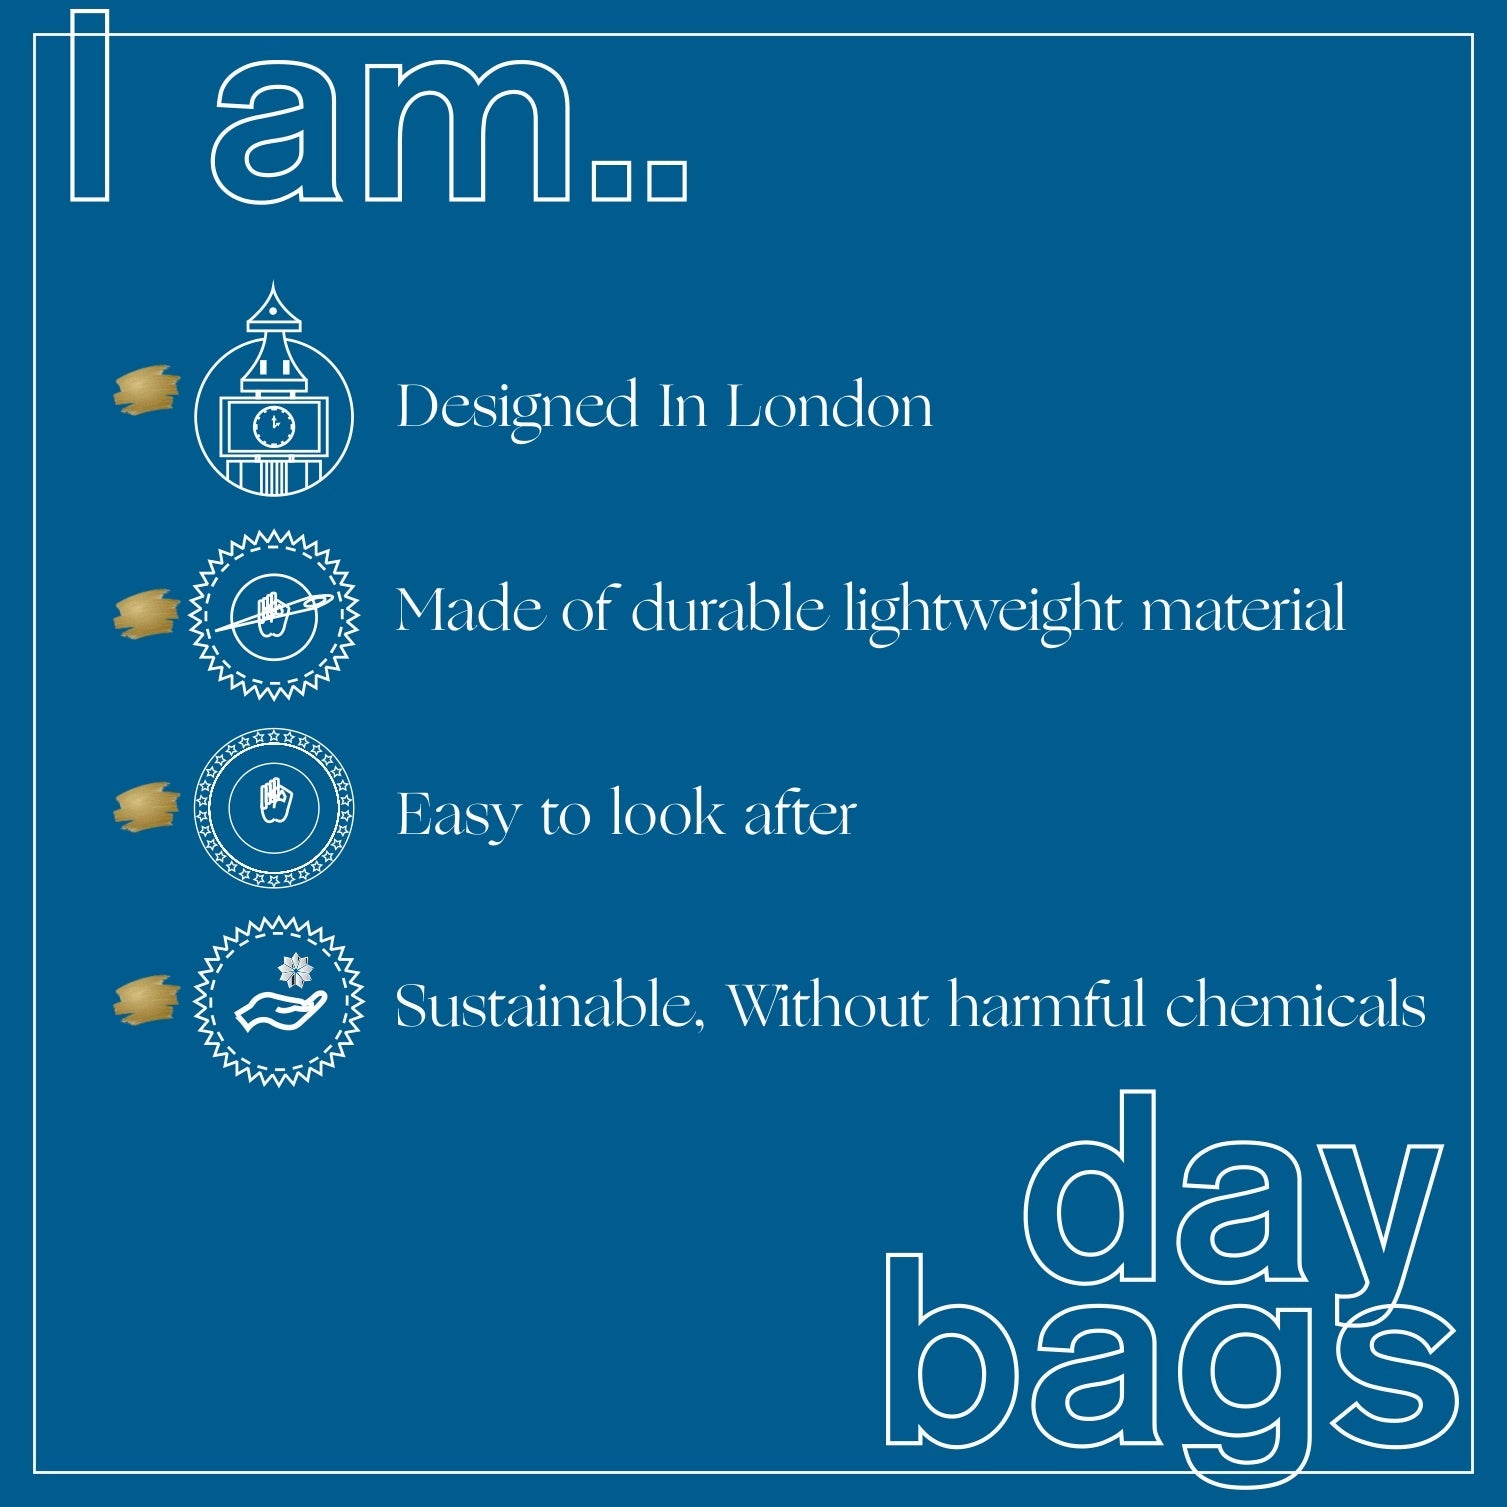 Accessorize London Women's Faux Leather Tan Patchwork Handheld Bag